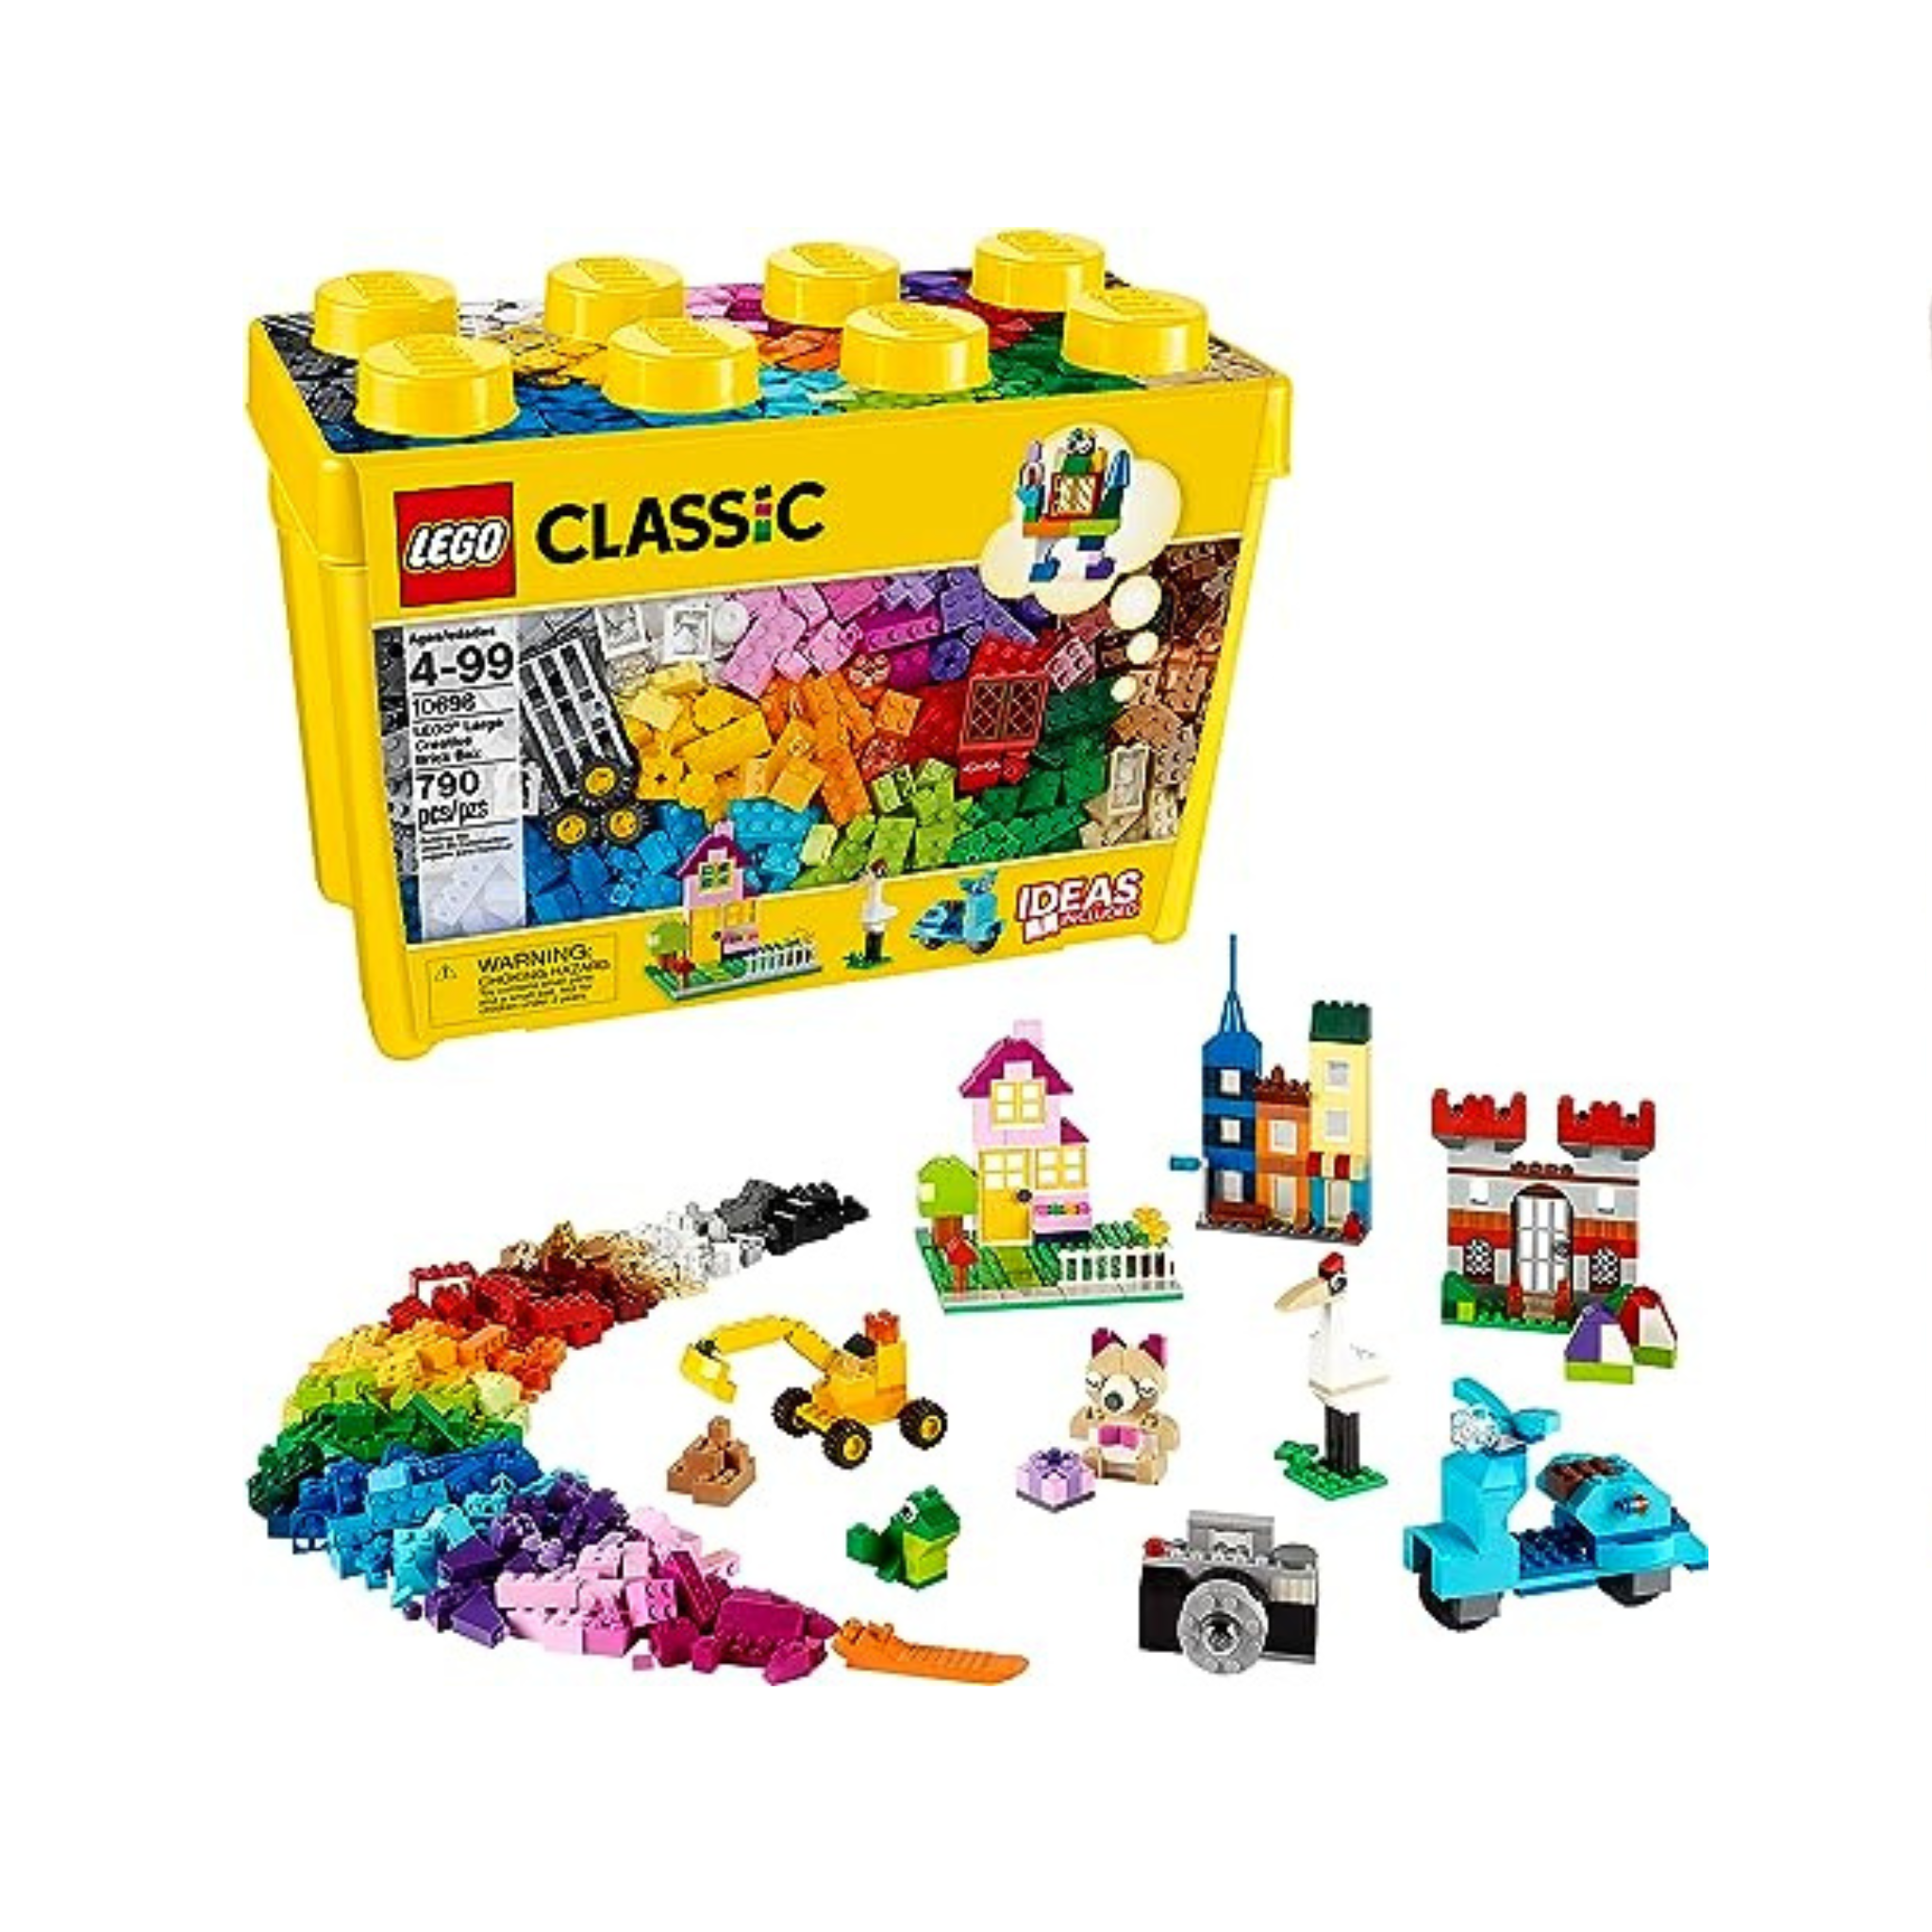 LEGO Classic Large Creative Brick Box Building Toy Set (790 Pcs)